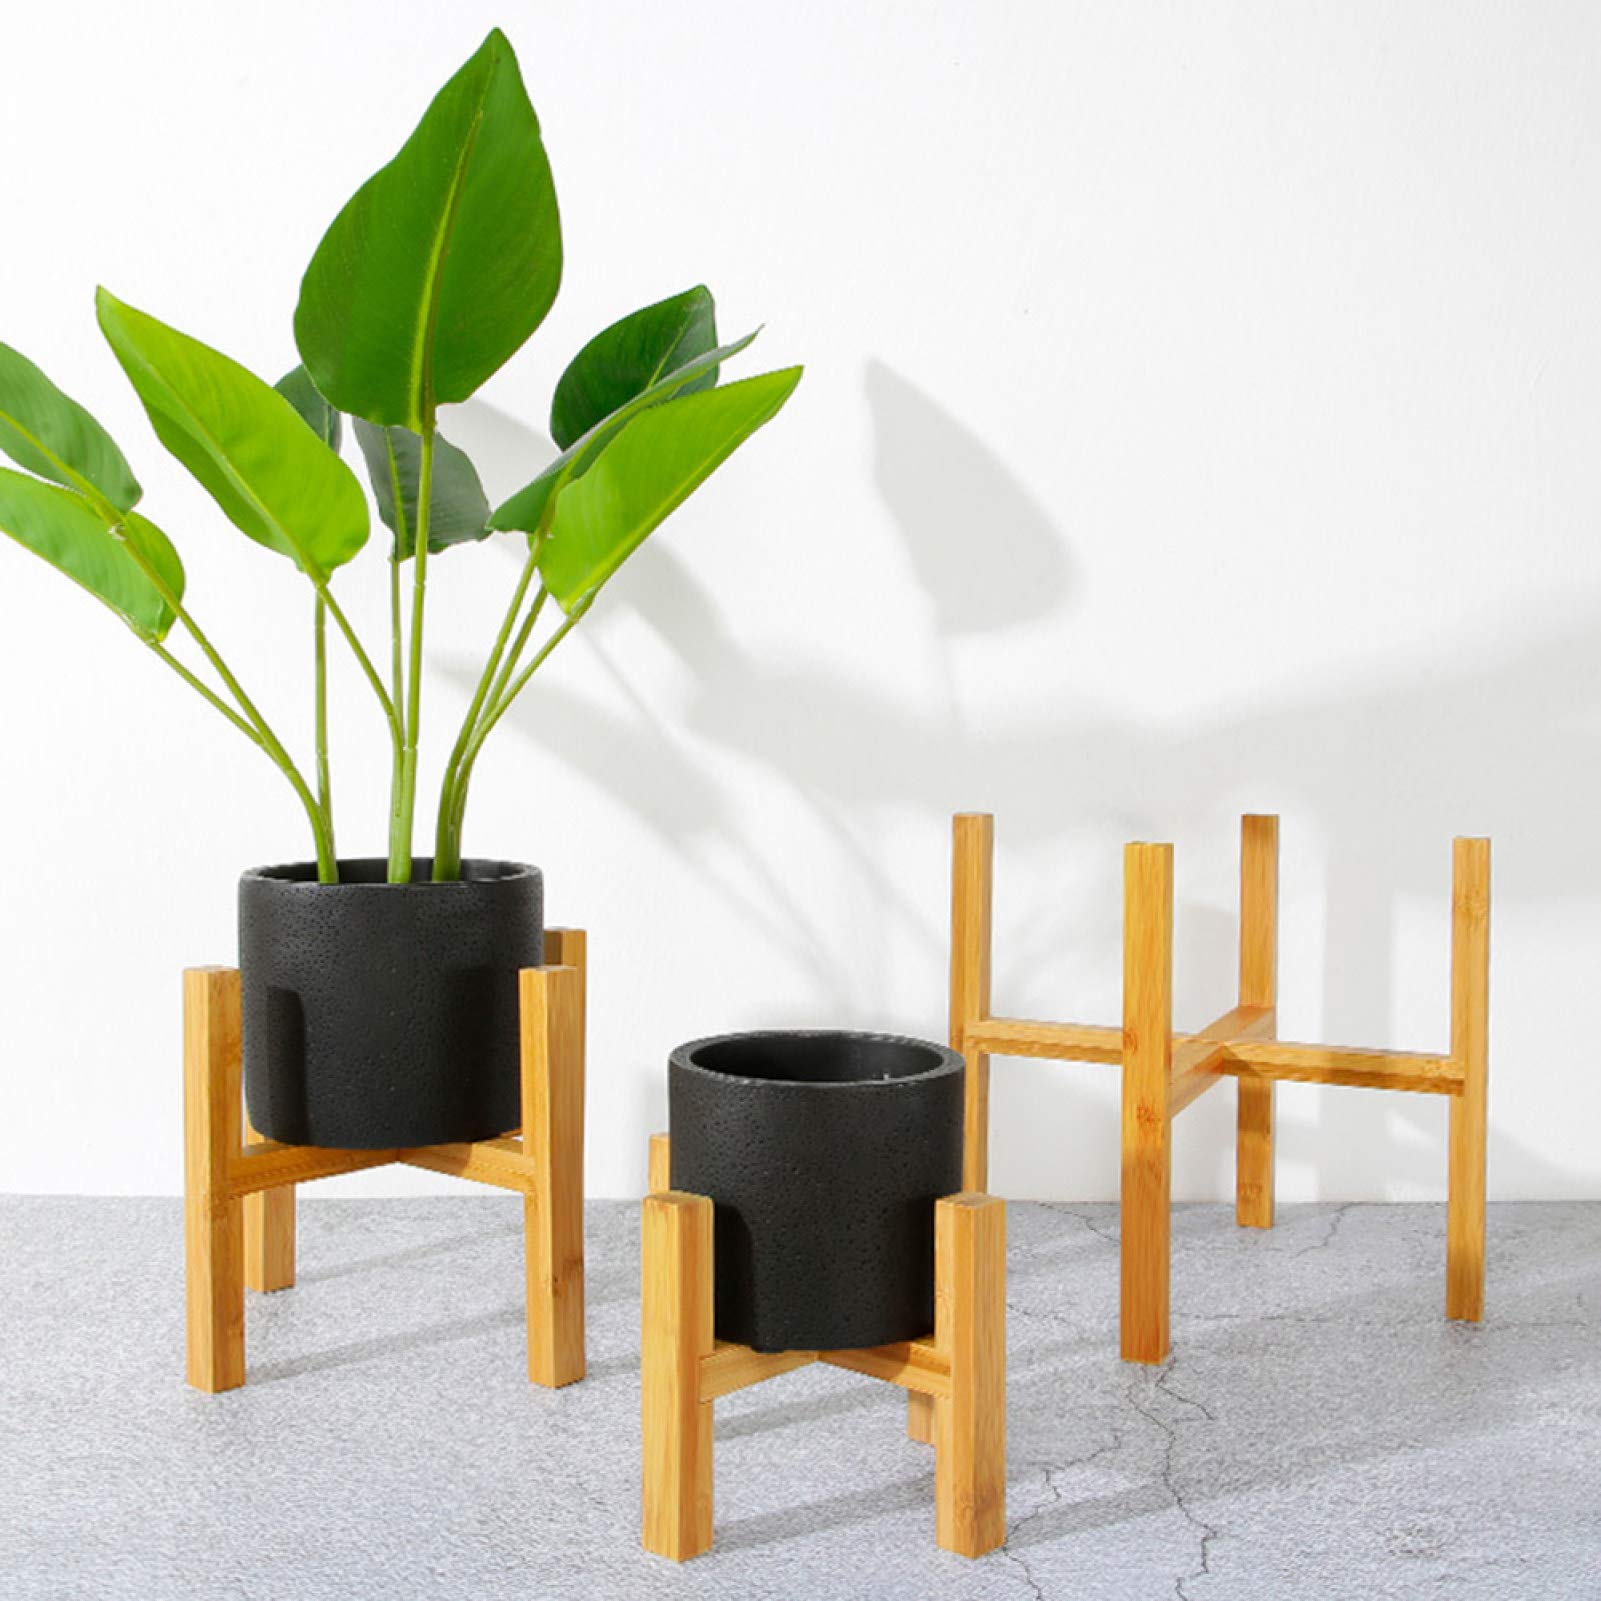 qiguch66 Storage Holder for Planting and Gardening,Wood Flower Pot Bonsai Rack Holder Home Garden Indoor Display Plant Stand Shelf - L